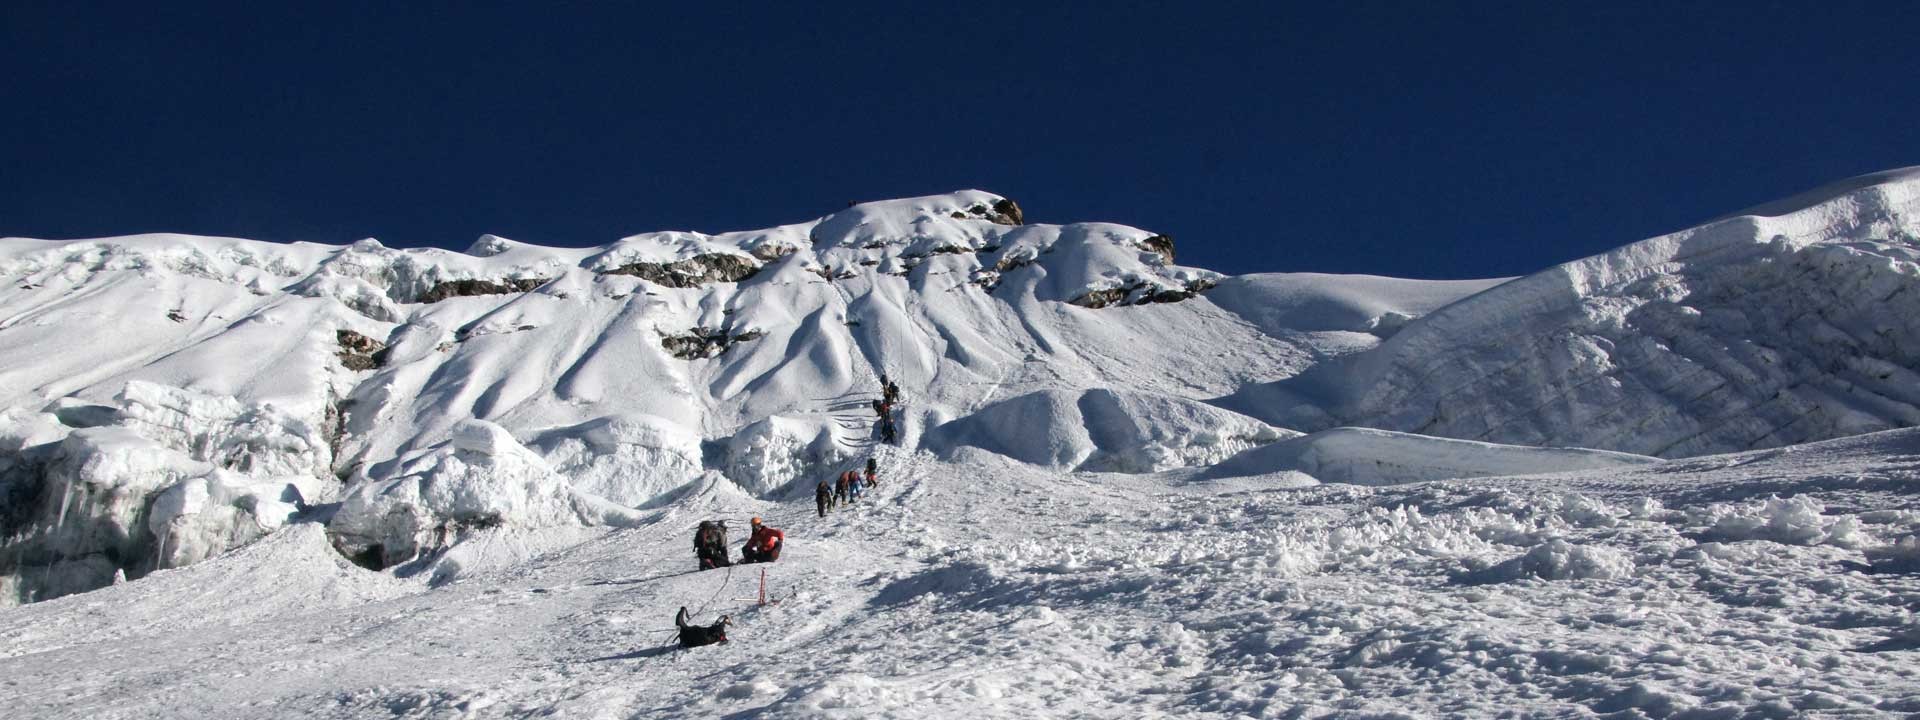 Everest Base camp with Island Peak Climbing